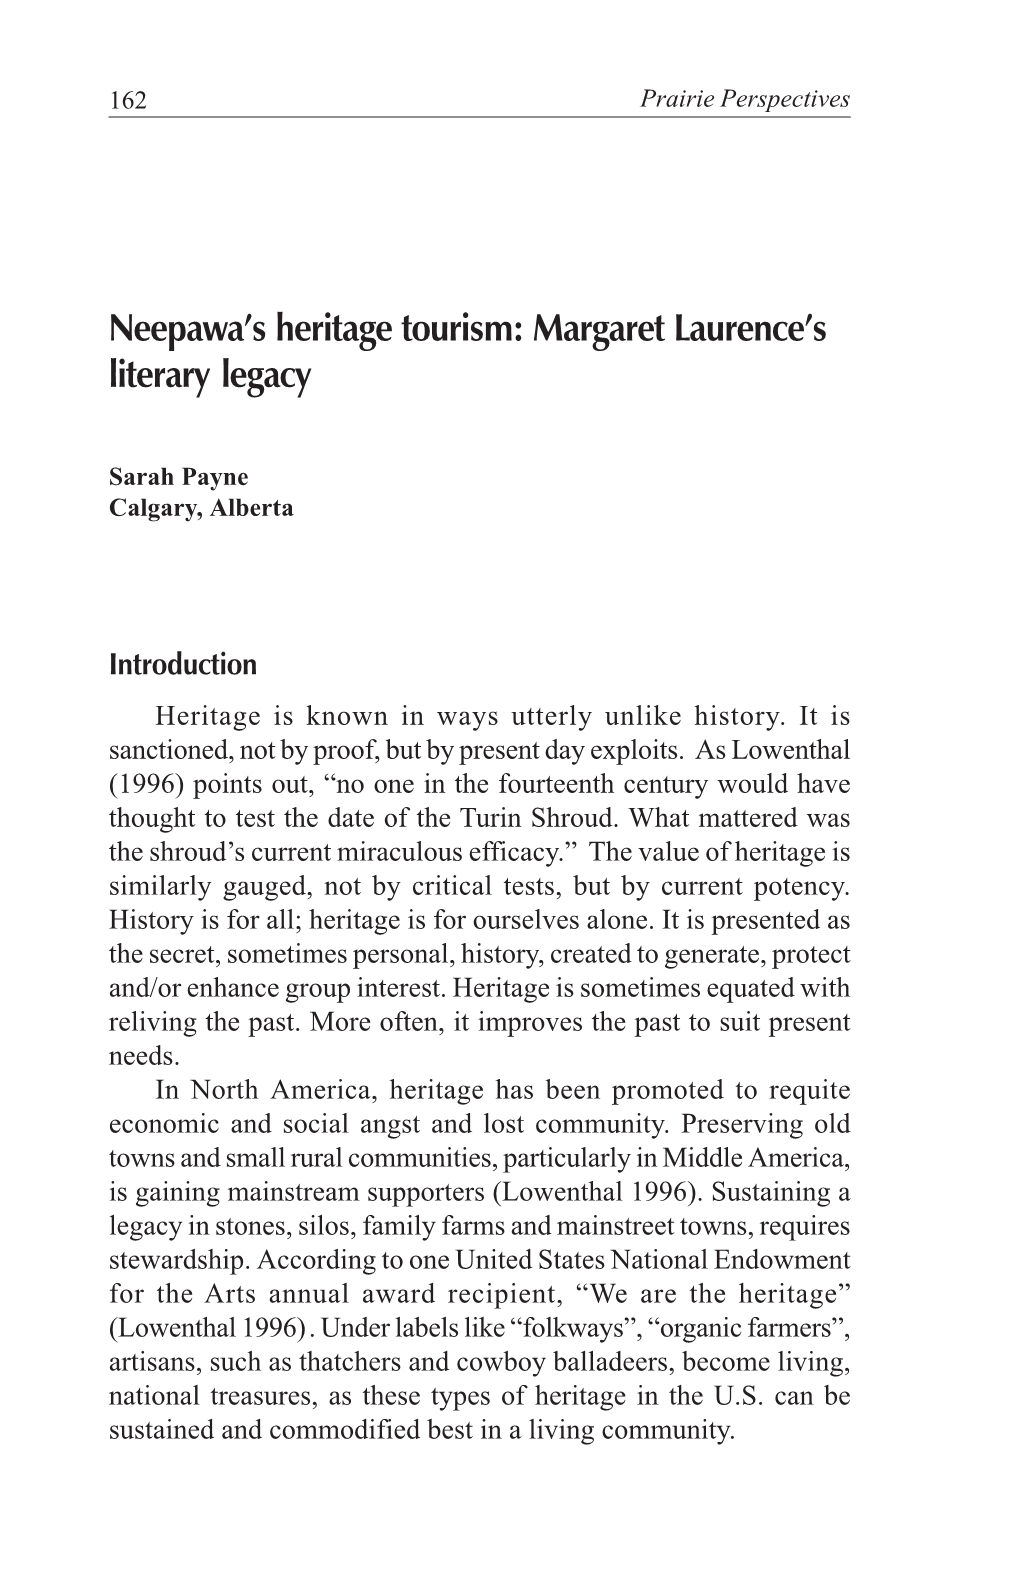 Neepawa's Heritage Tourism: Margaret Laurence's Literary Legacy